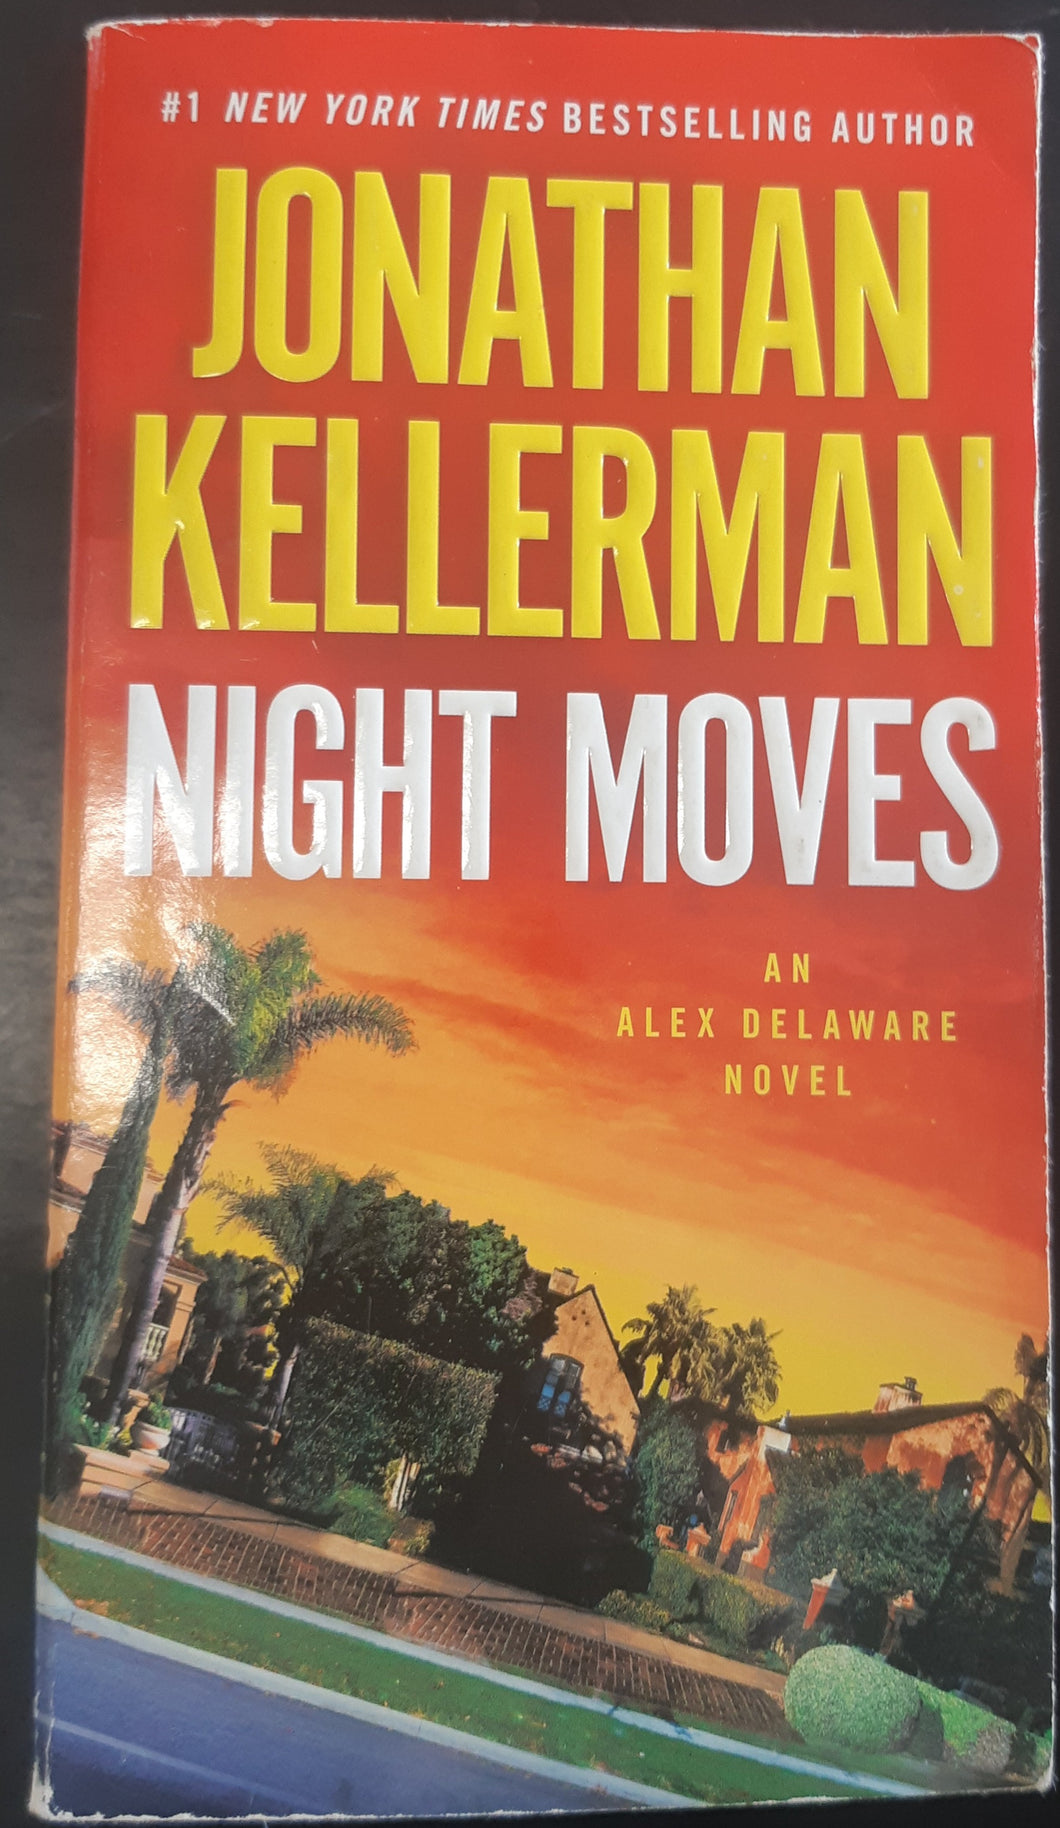 Night Moves: An Alex Delaware Novel by Jonathan Kellerman